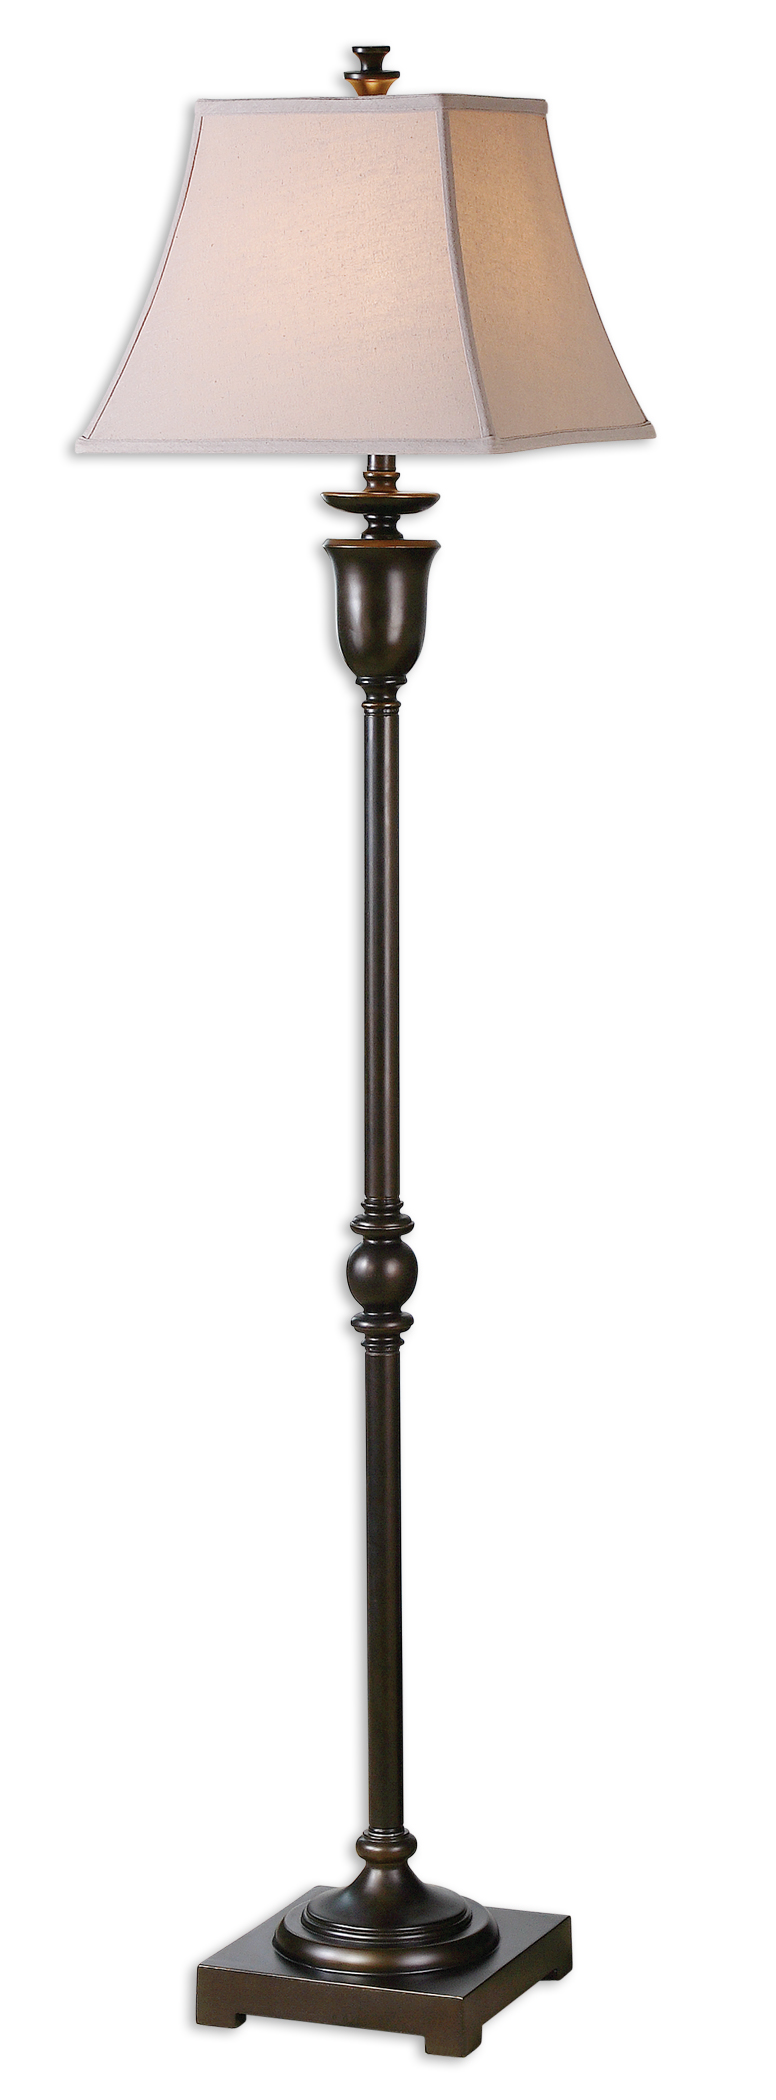 Picture of VIGGIANO FLOOR LAMP, SET OF 2